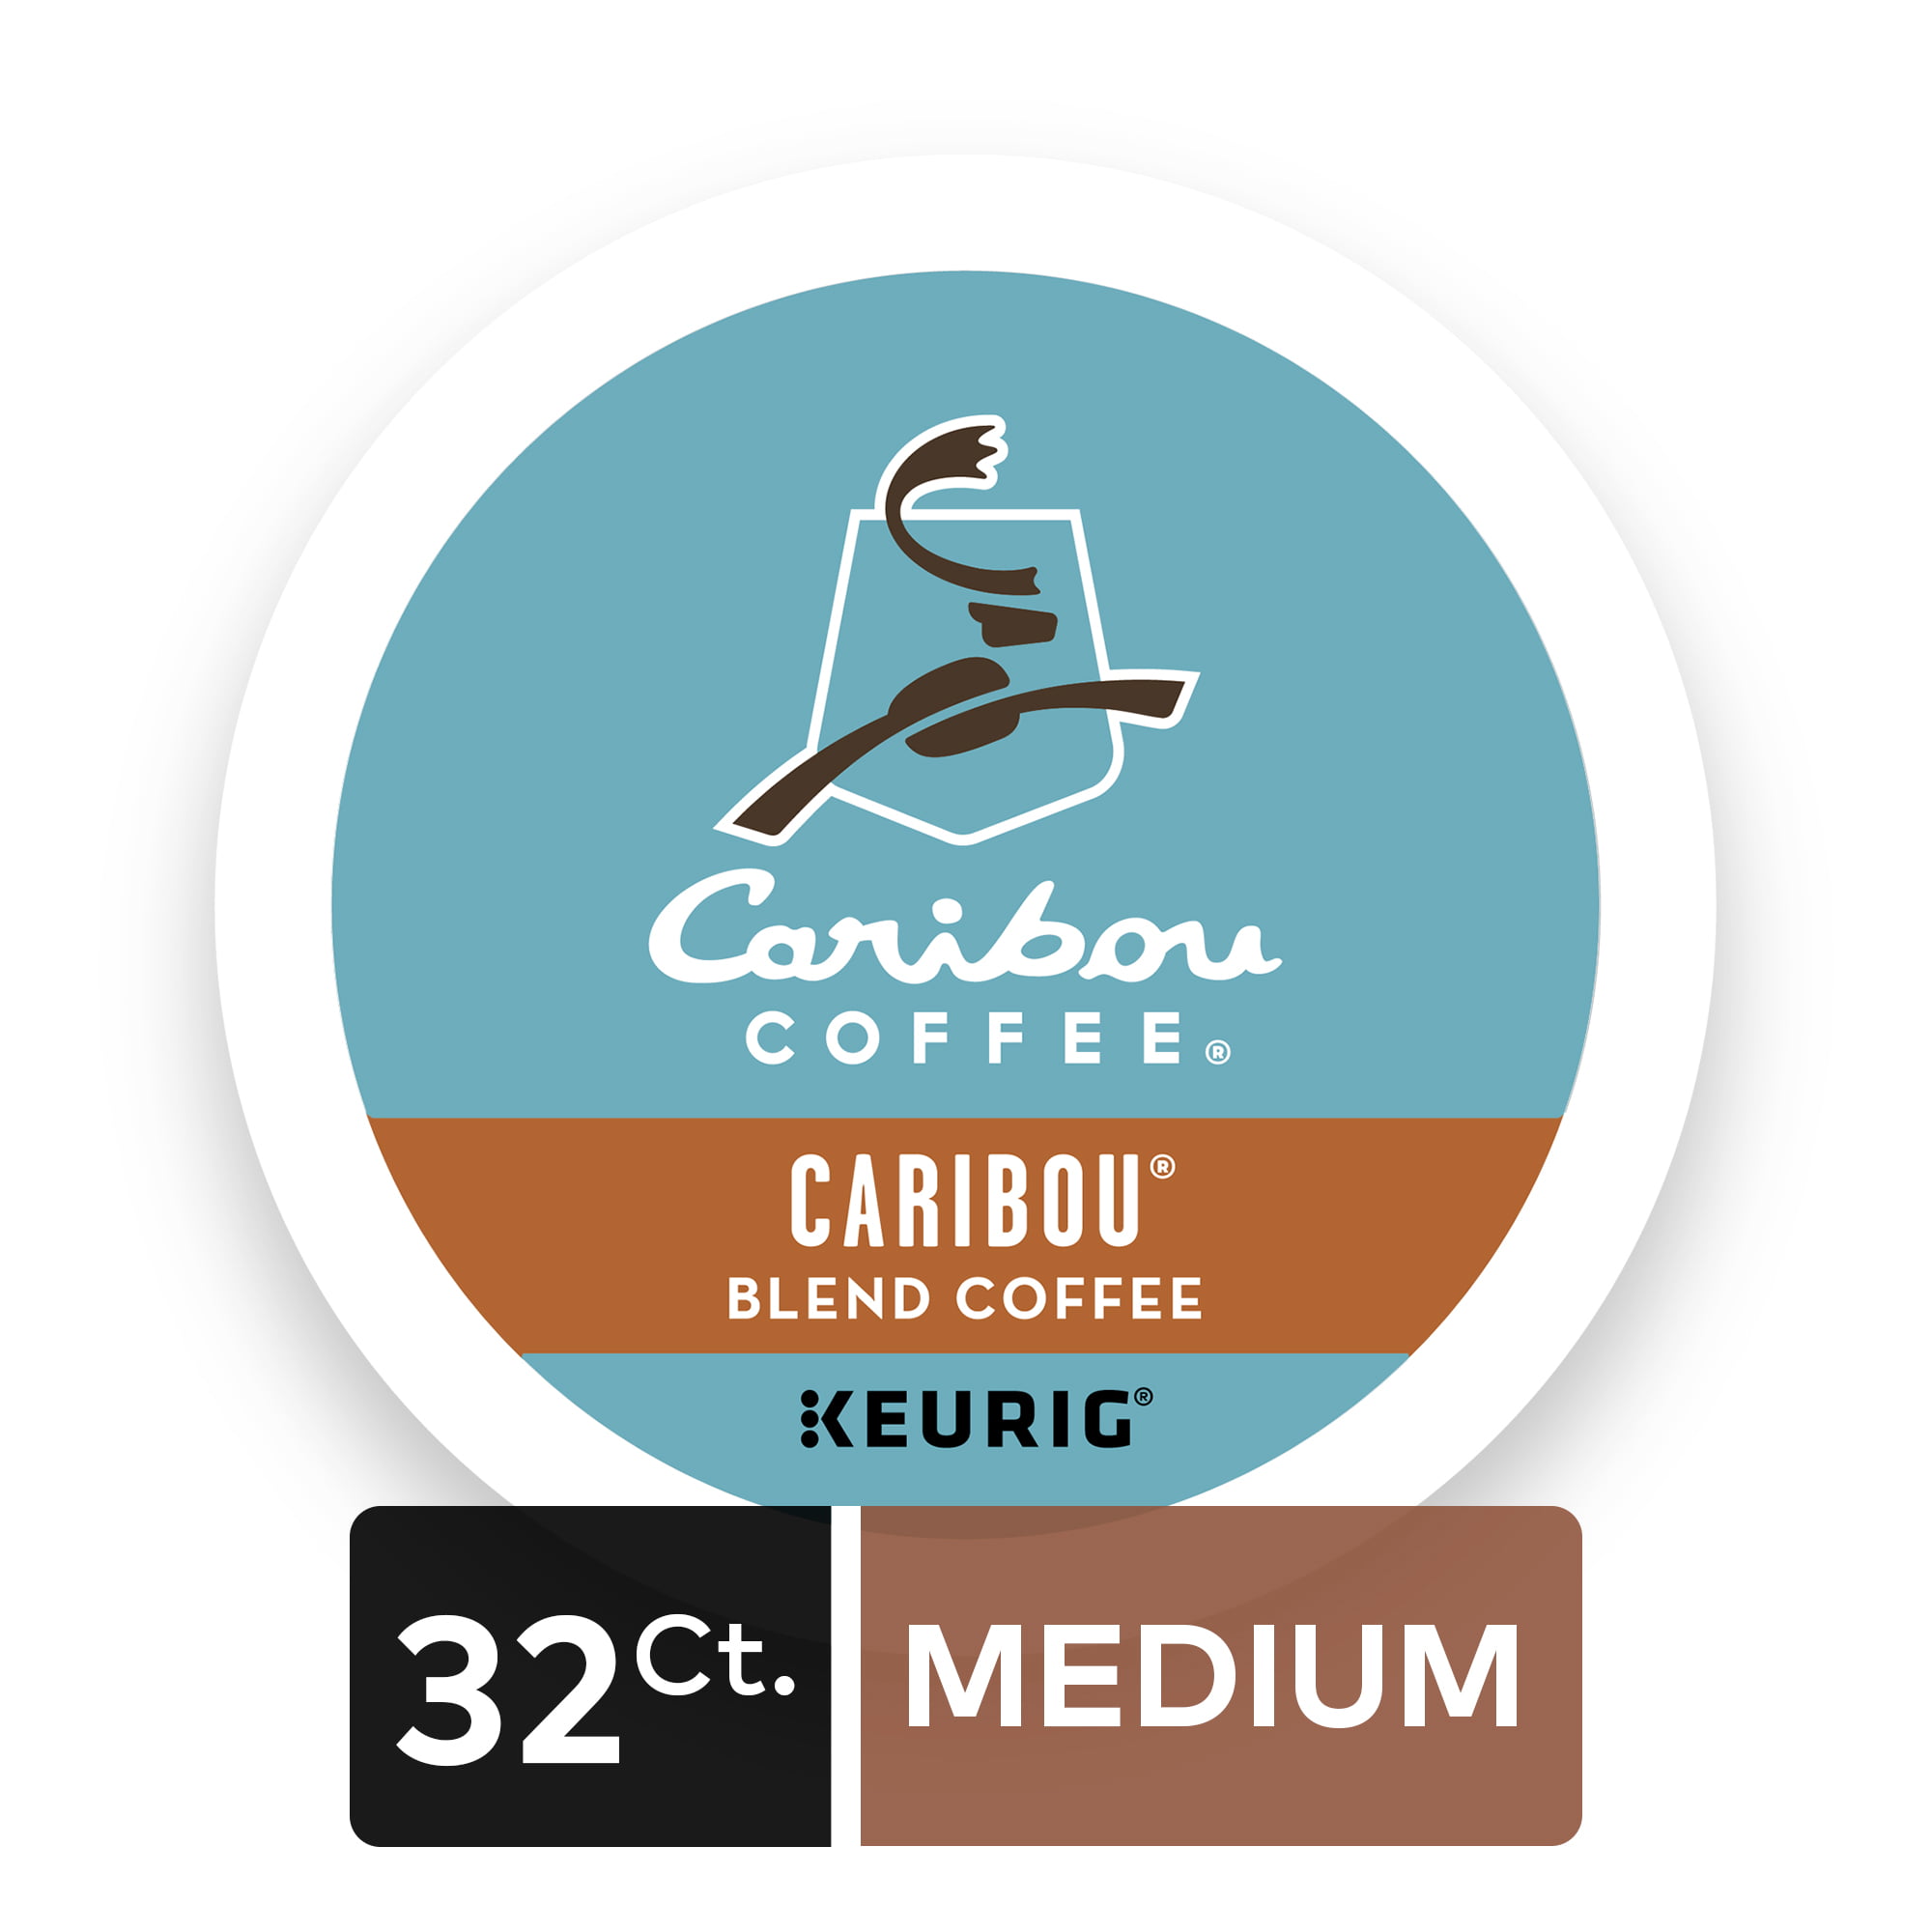 Photo 1 of Caribou Coffee Caribou Blend, Single-Serve Keurig K-Cup Pods, Medium Roast Coffee, 32 Count
EXP AUG 7 2022